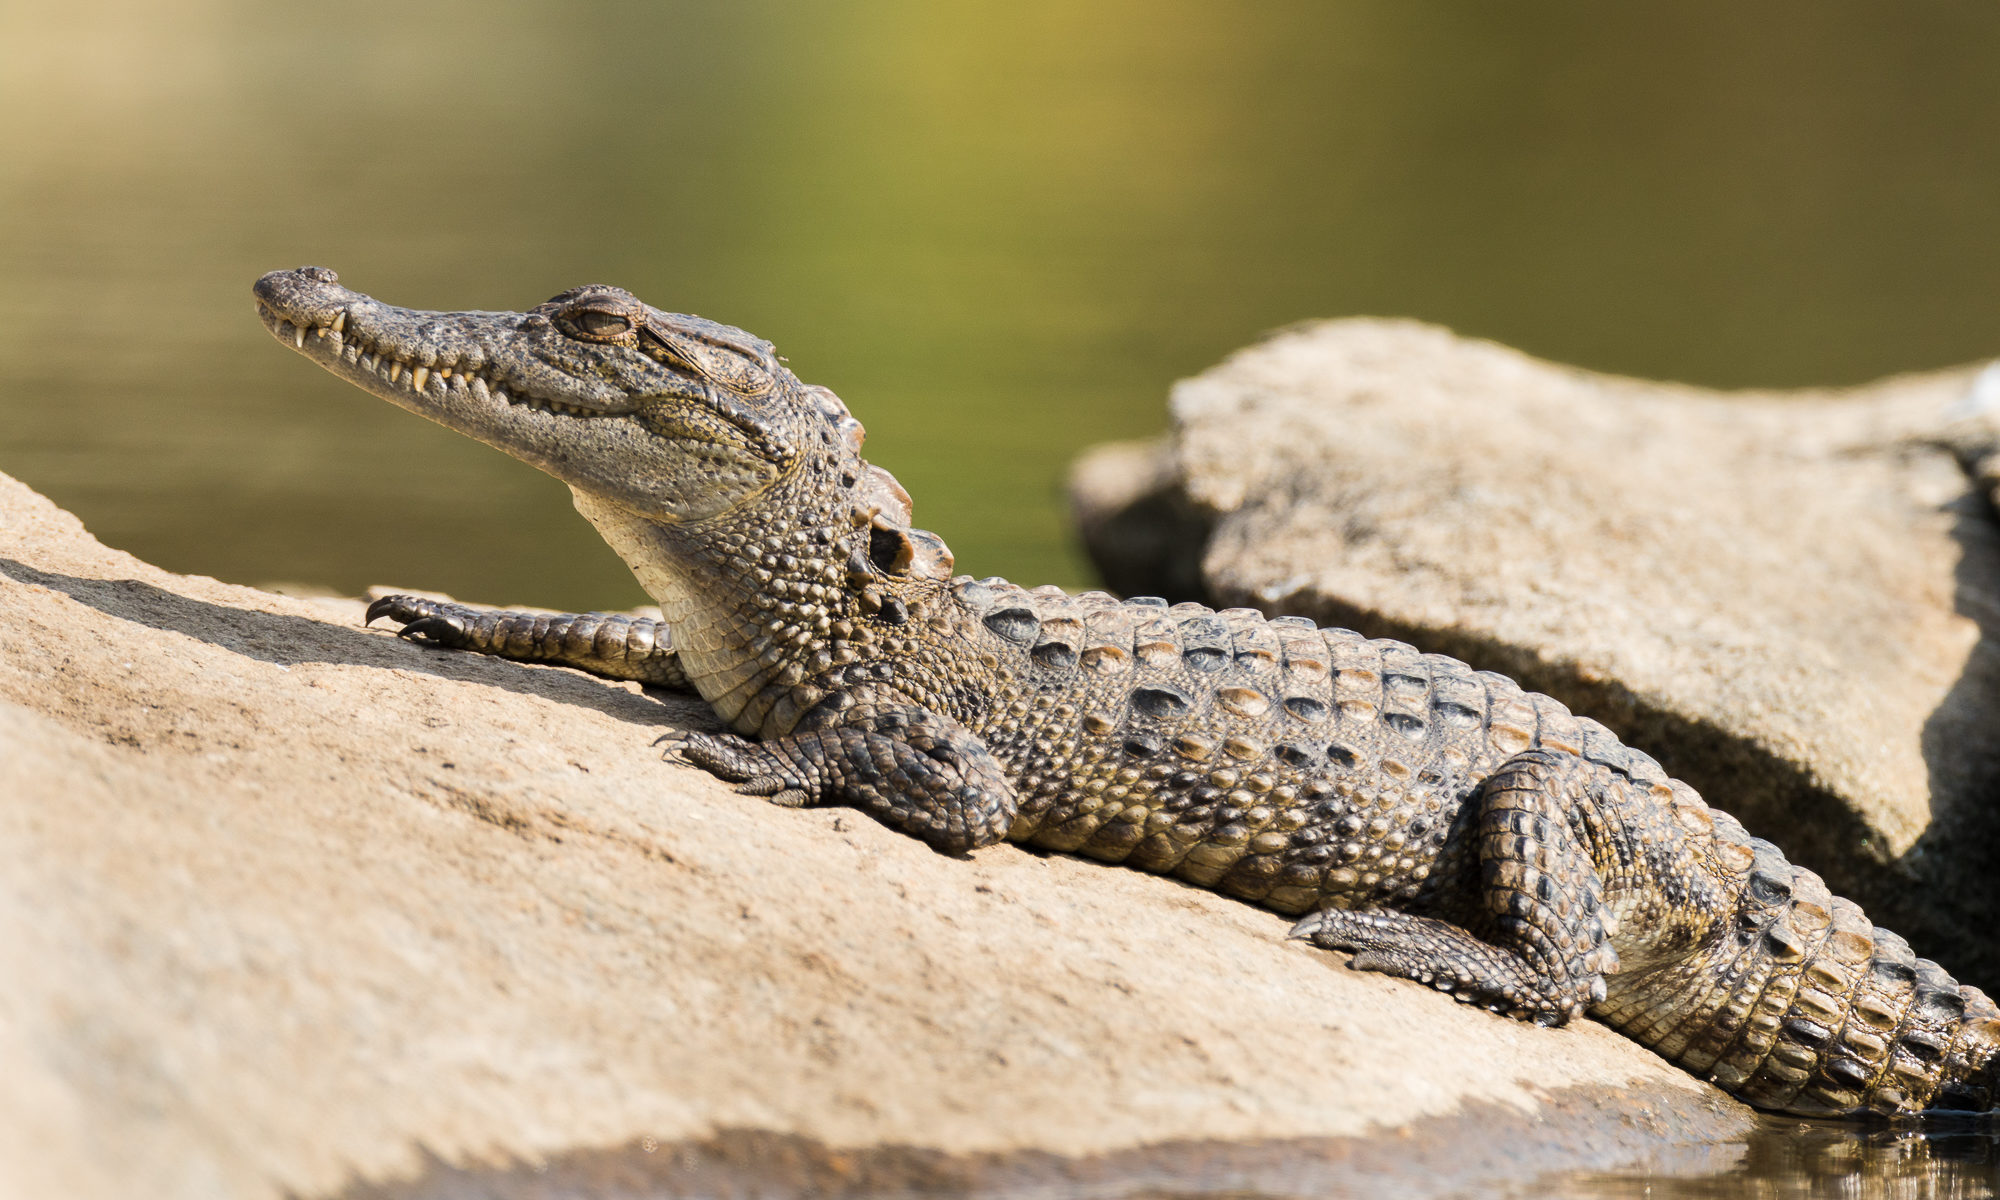 A mugger crocodile suns itself on a large rock, Ranganathittu Bird Sanctuary, India